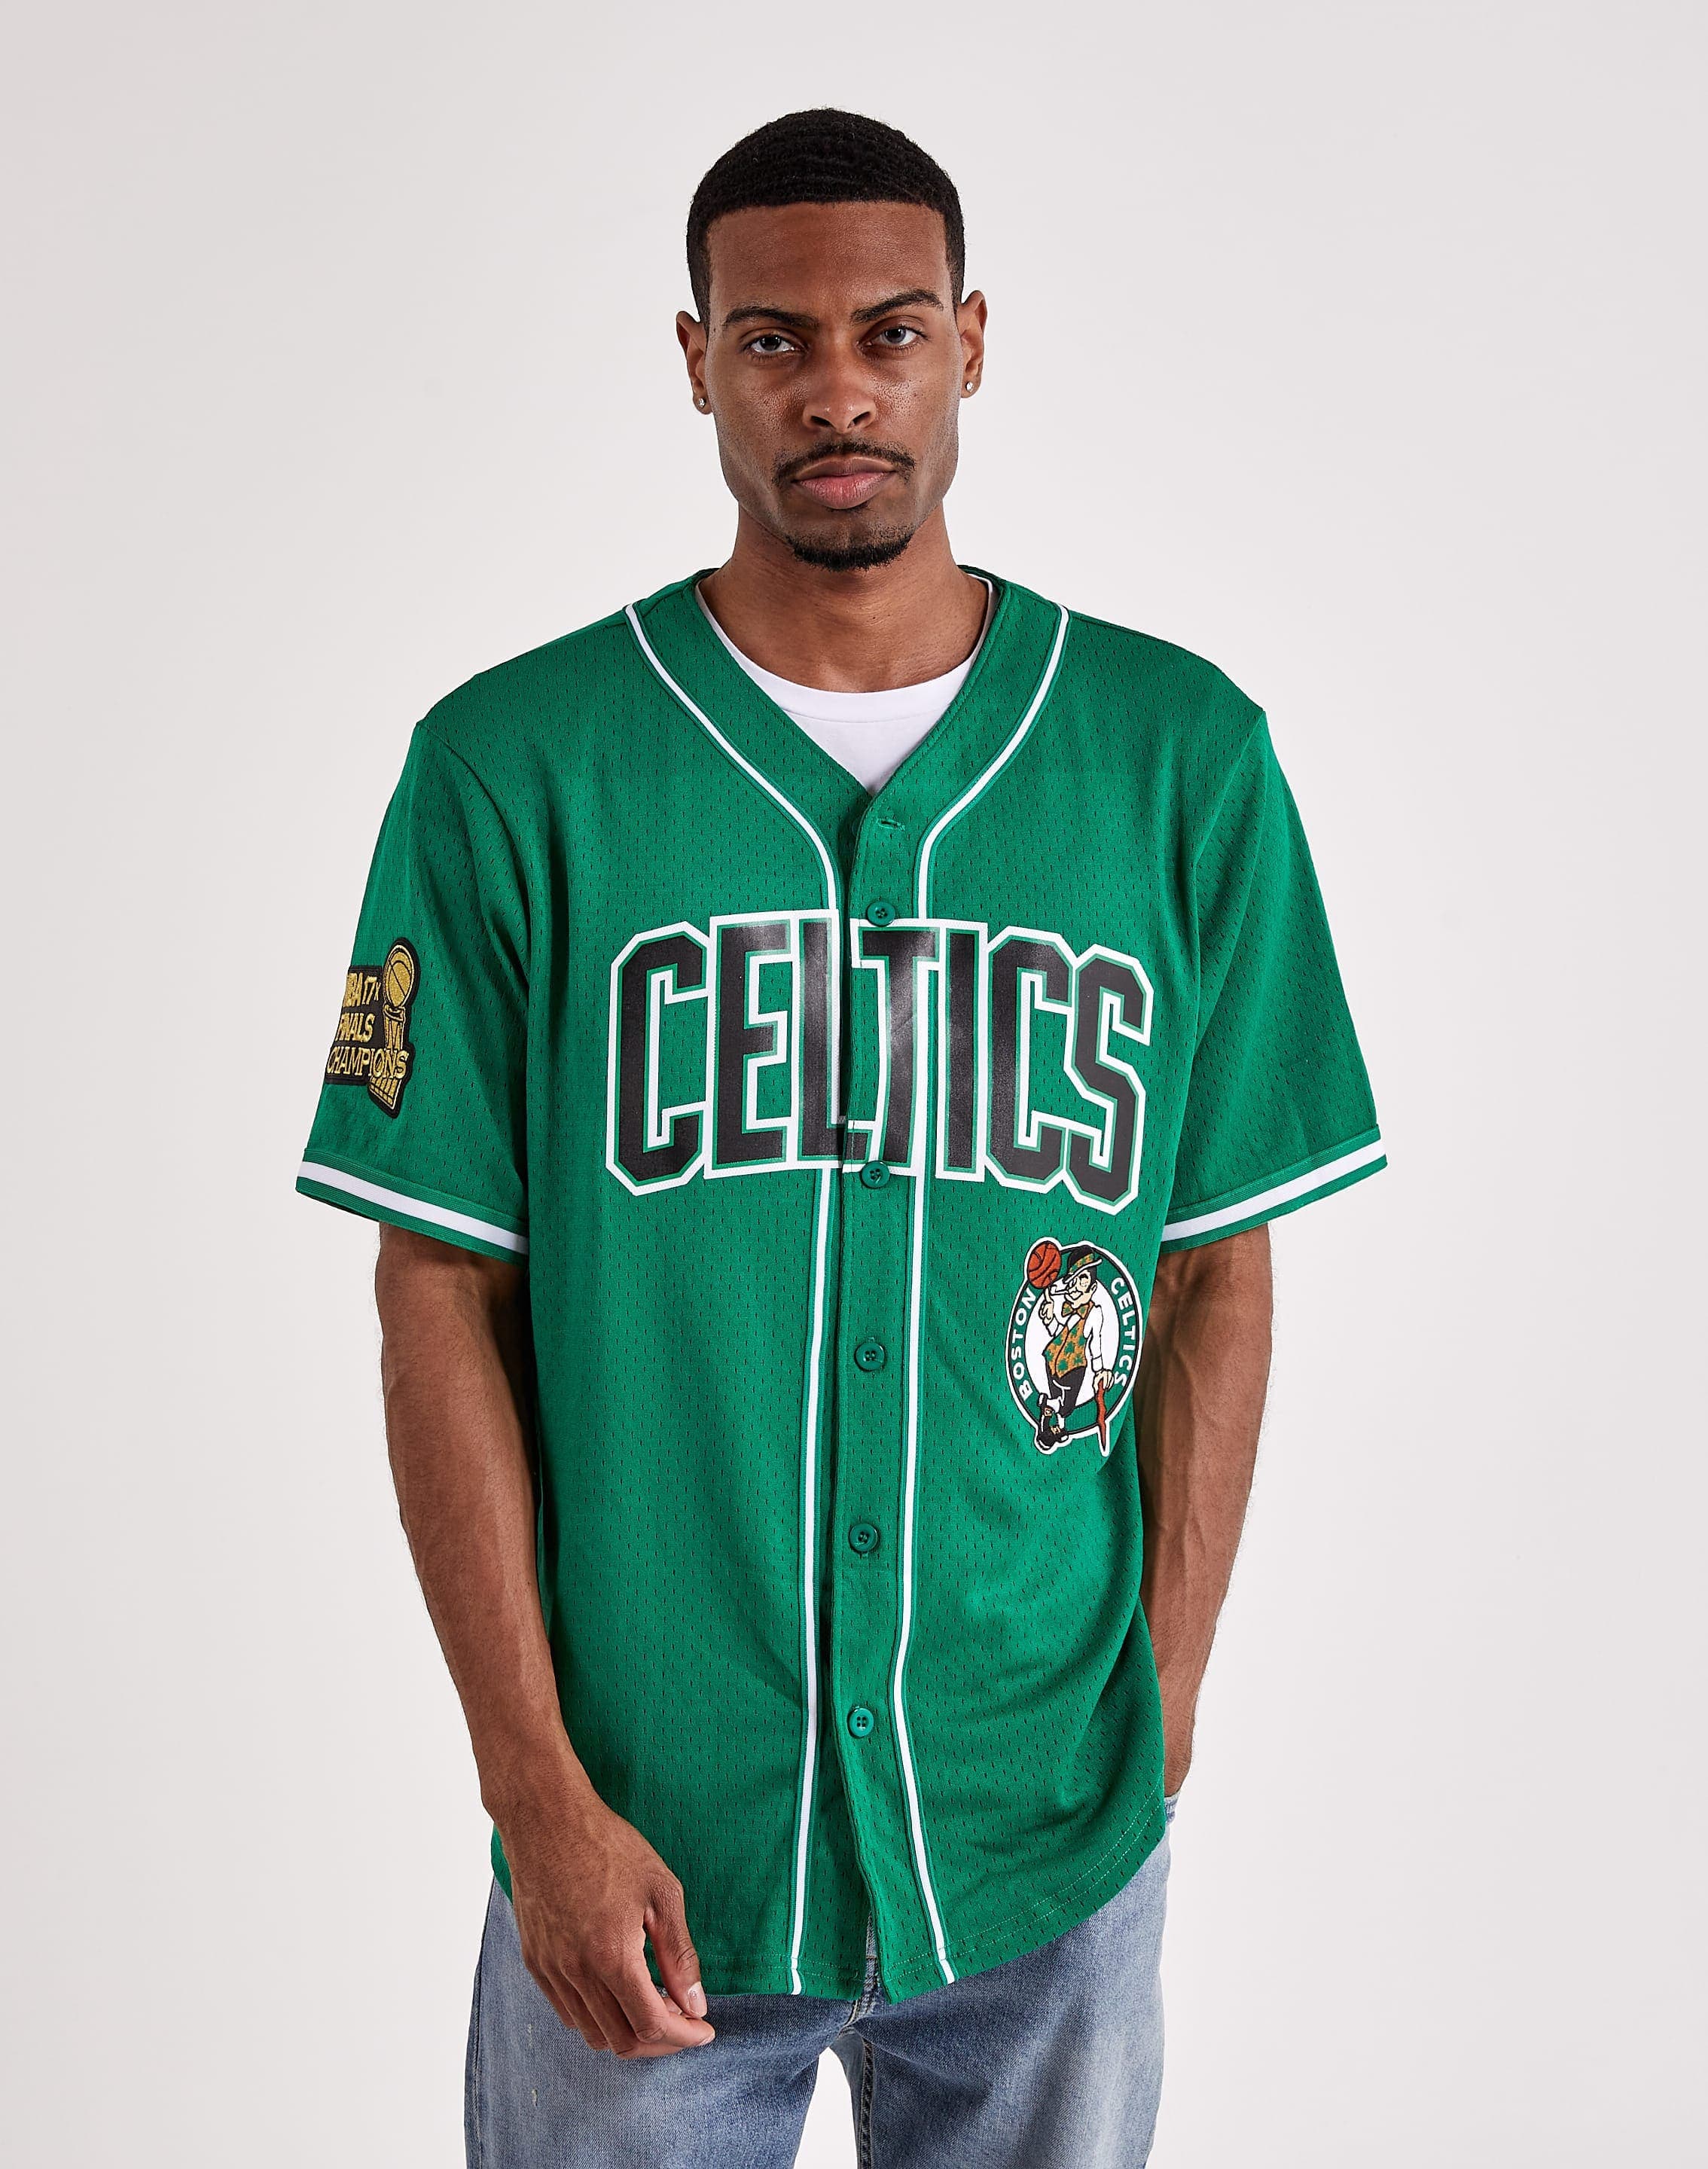 Boston Celtics Gear, Celtics Jerseys, Celtics Pro Shop, Celtics Apparel